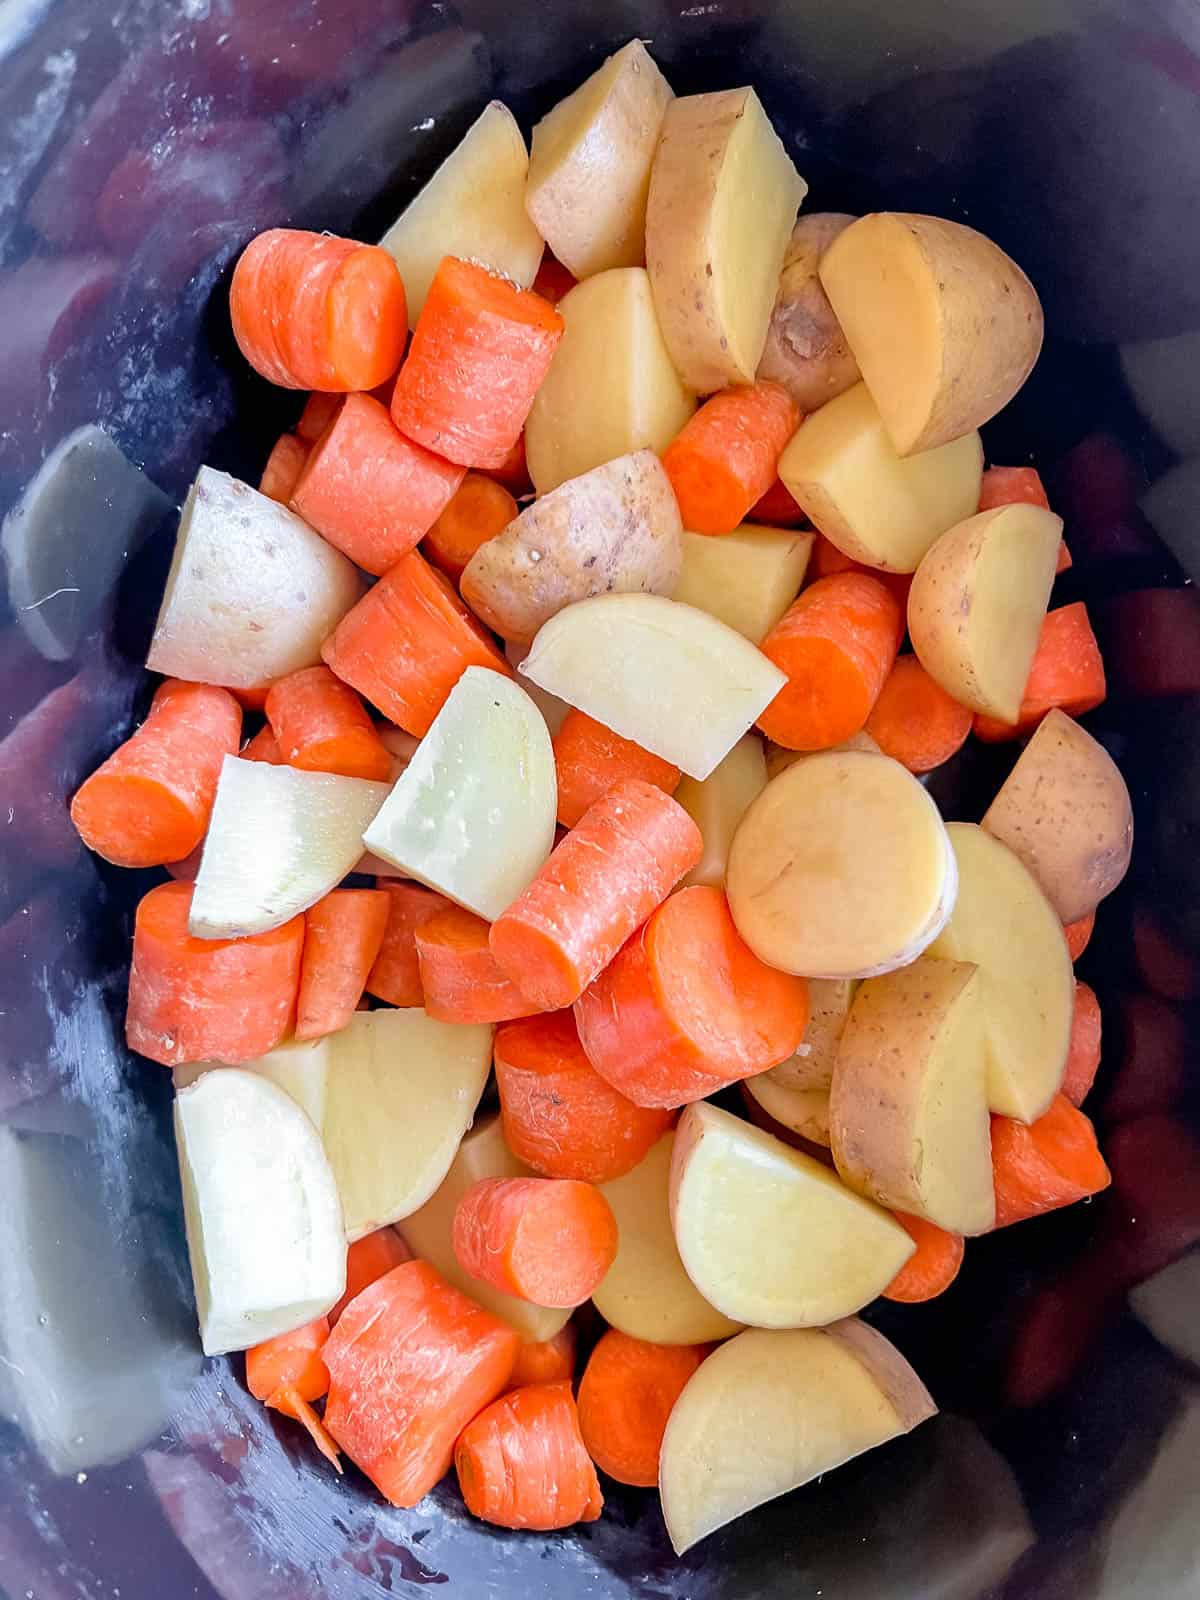 Carrot and potatoes in crock pot.